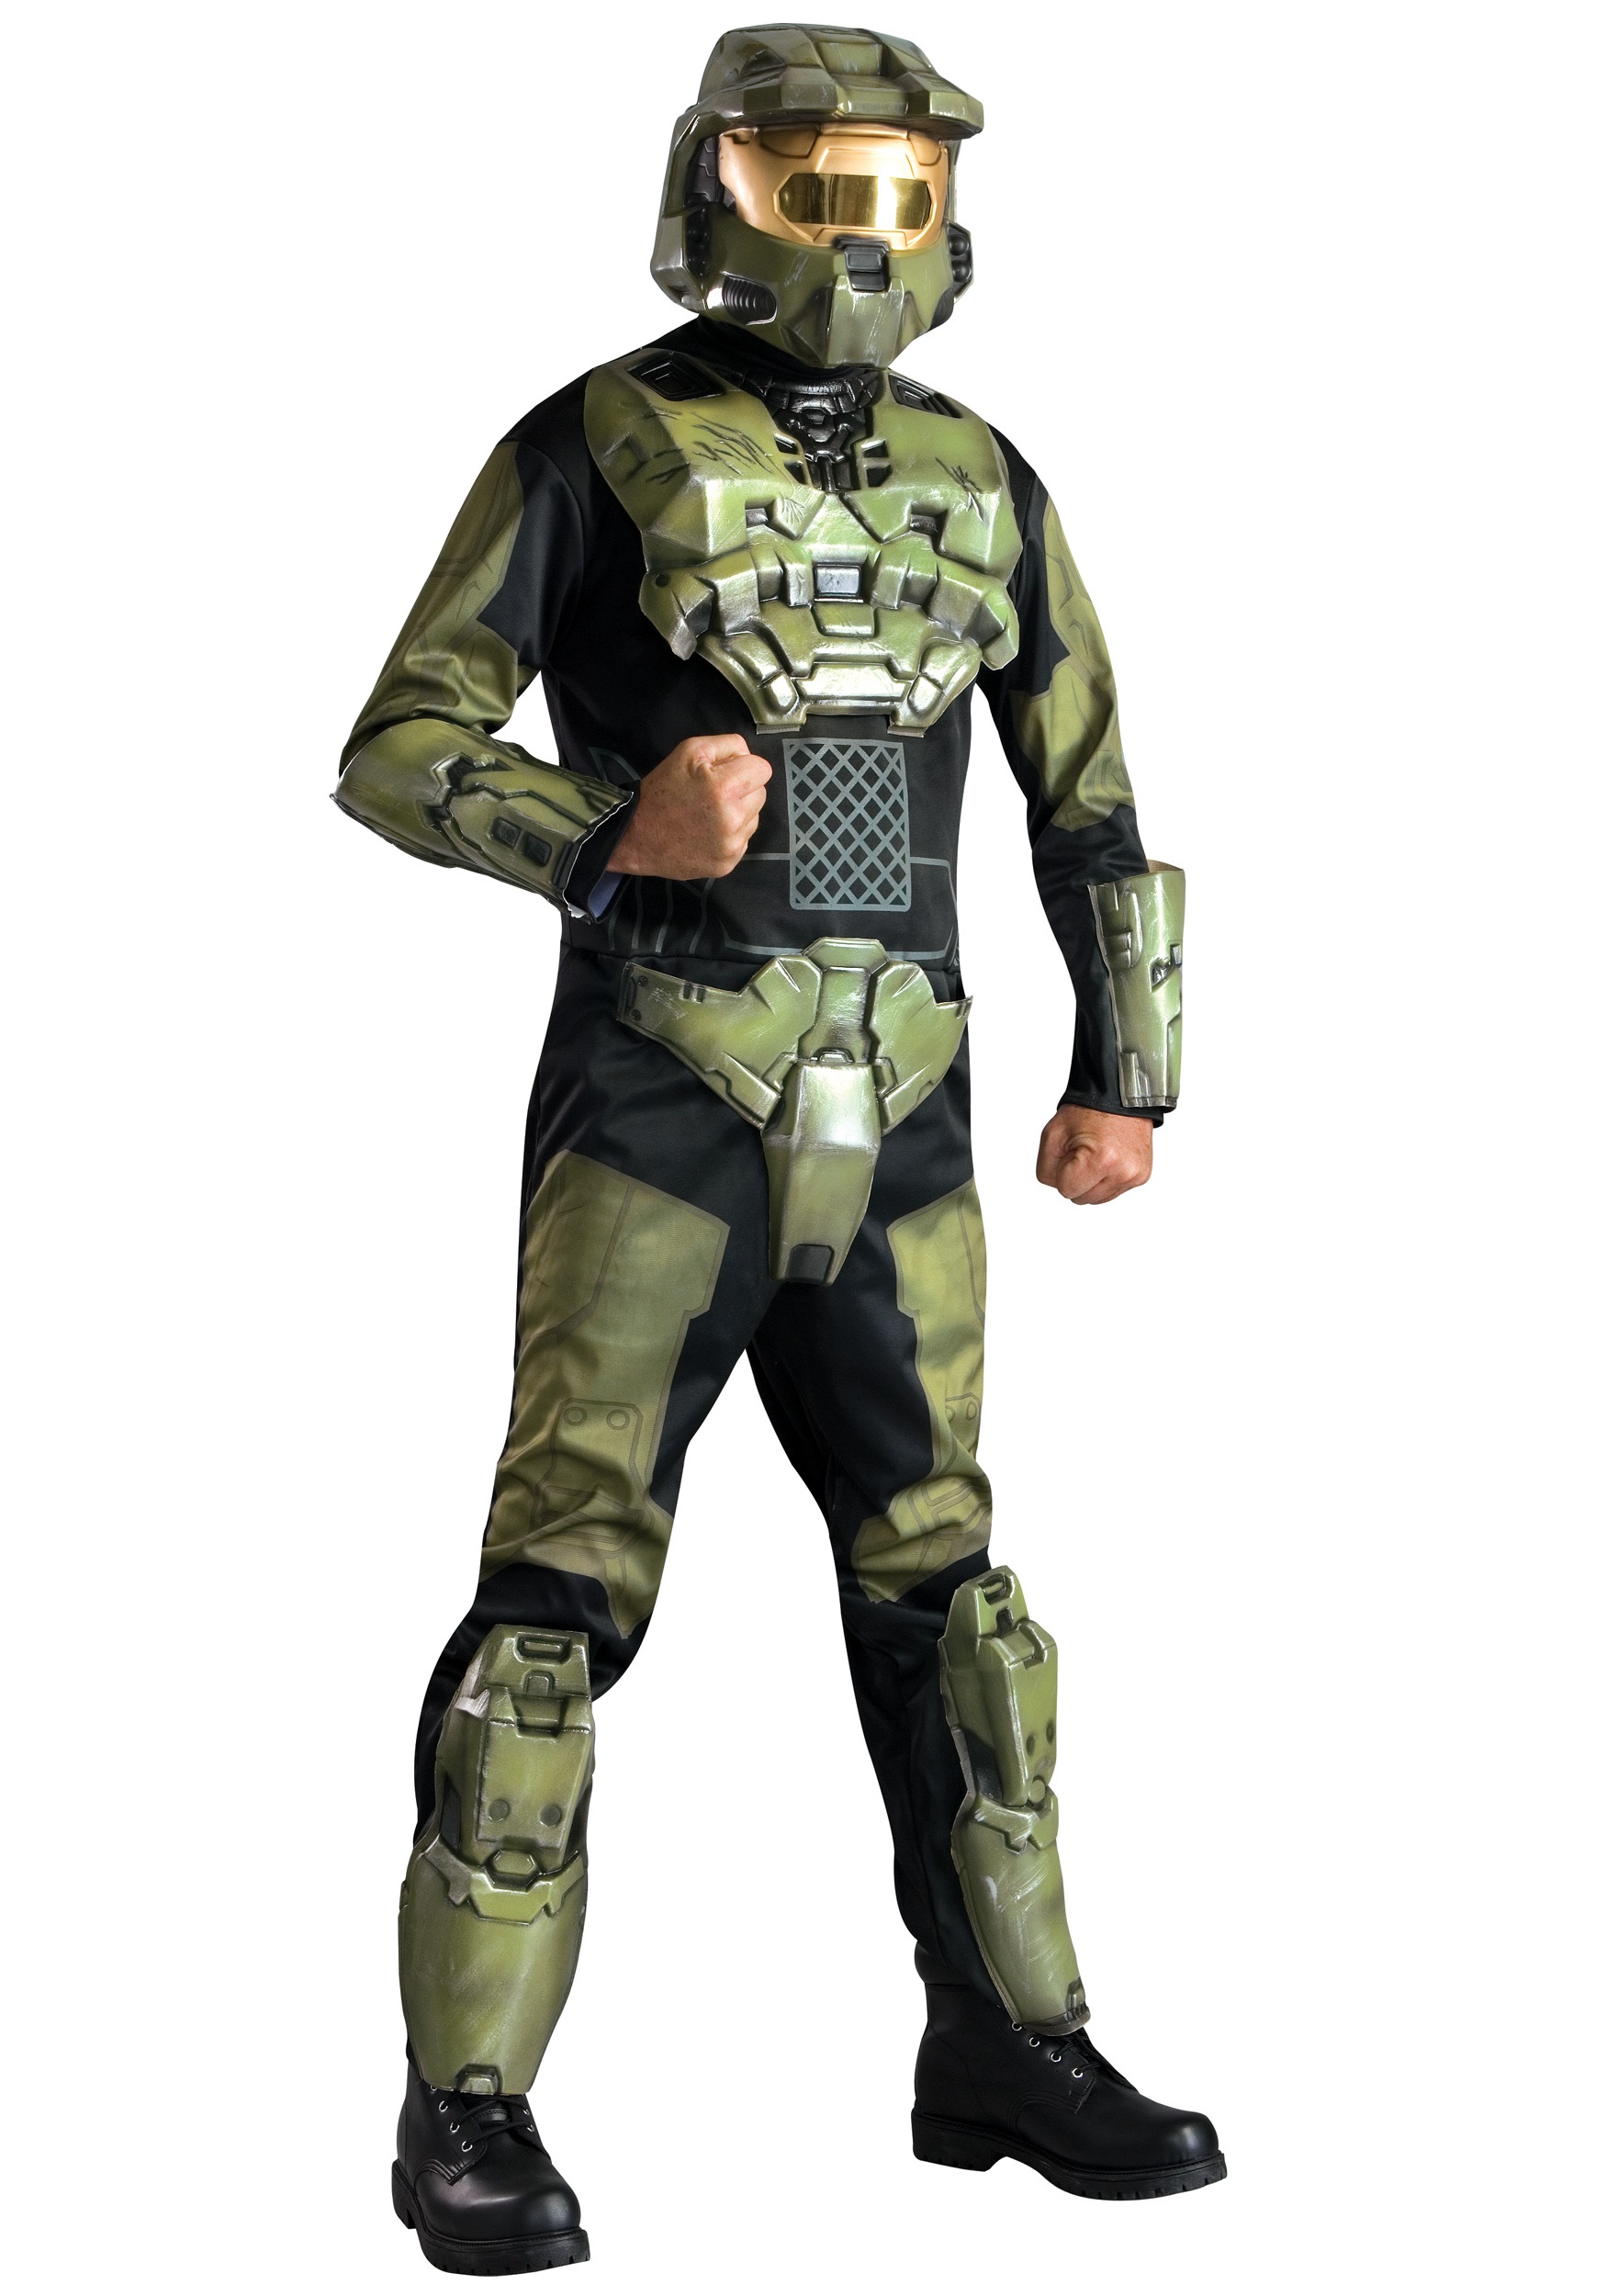 Deluxe Halo Master Chief Costume